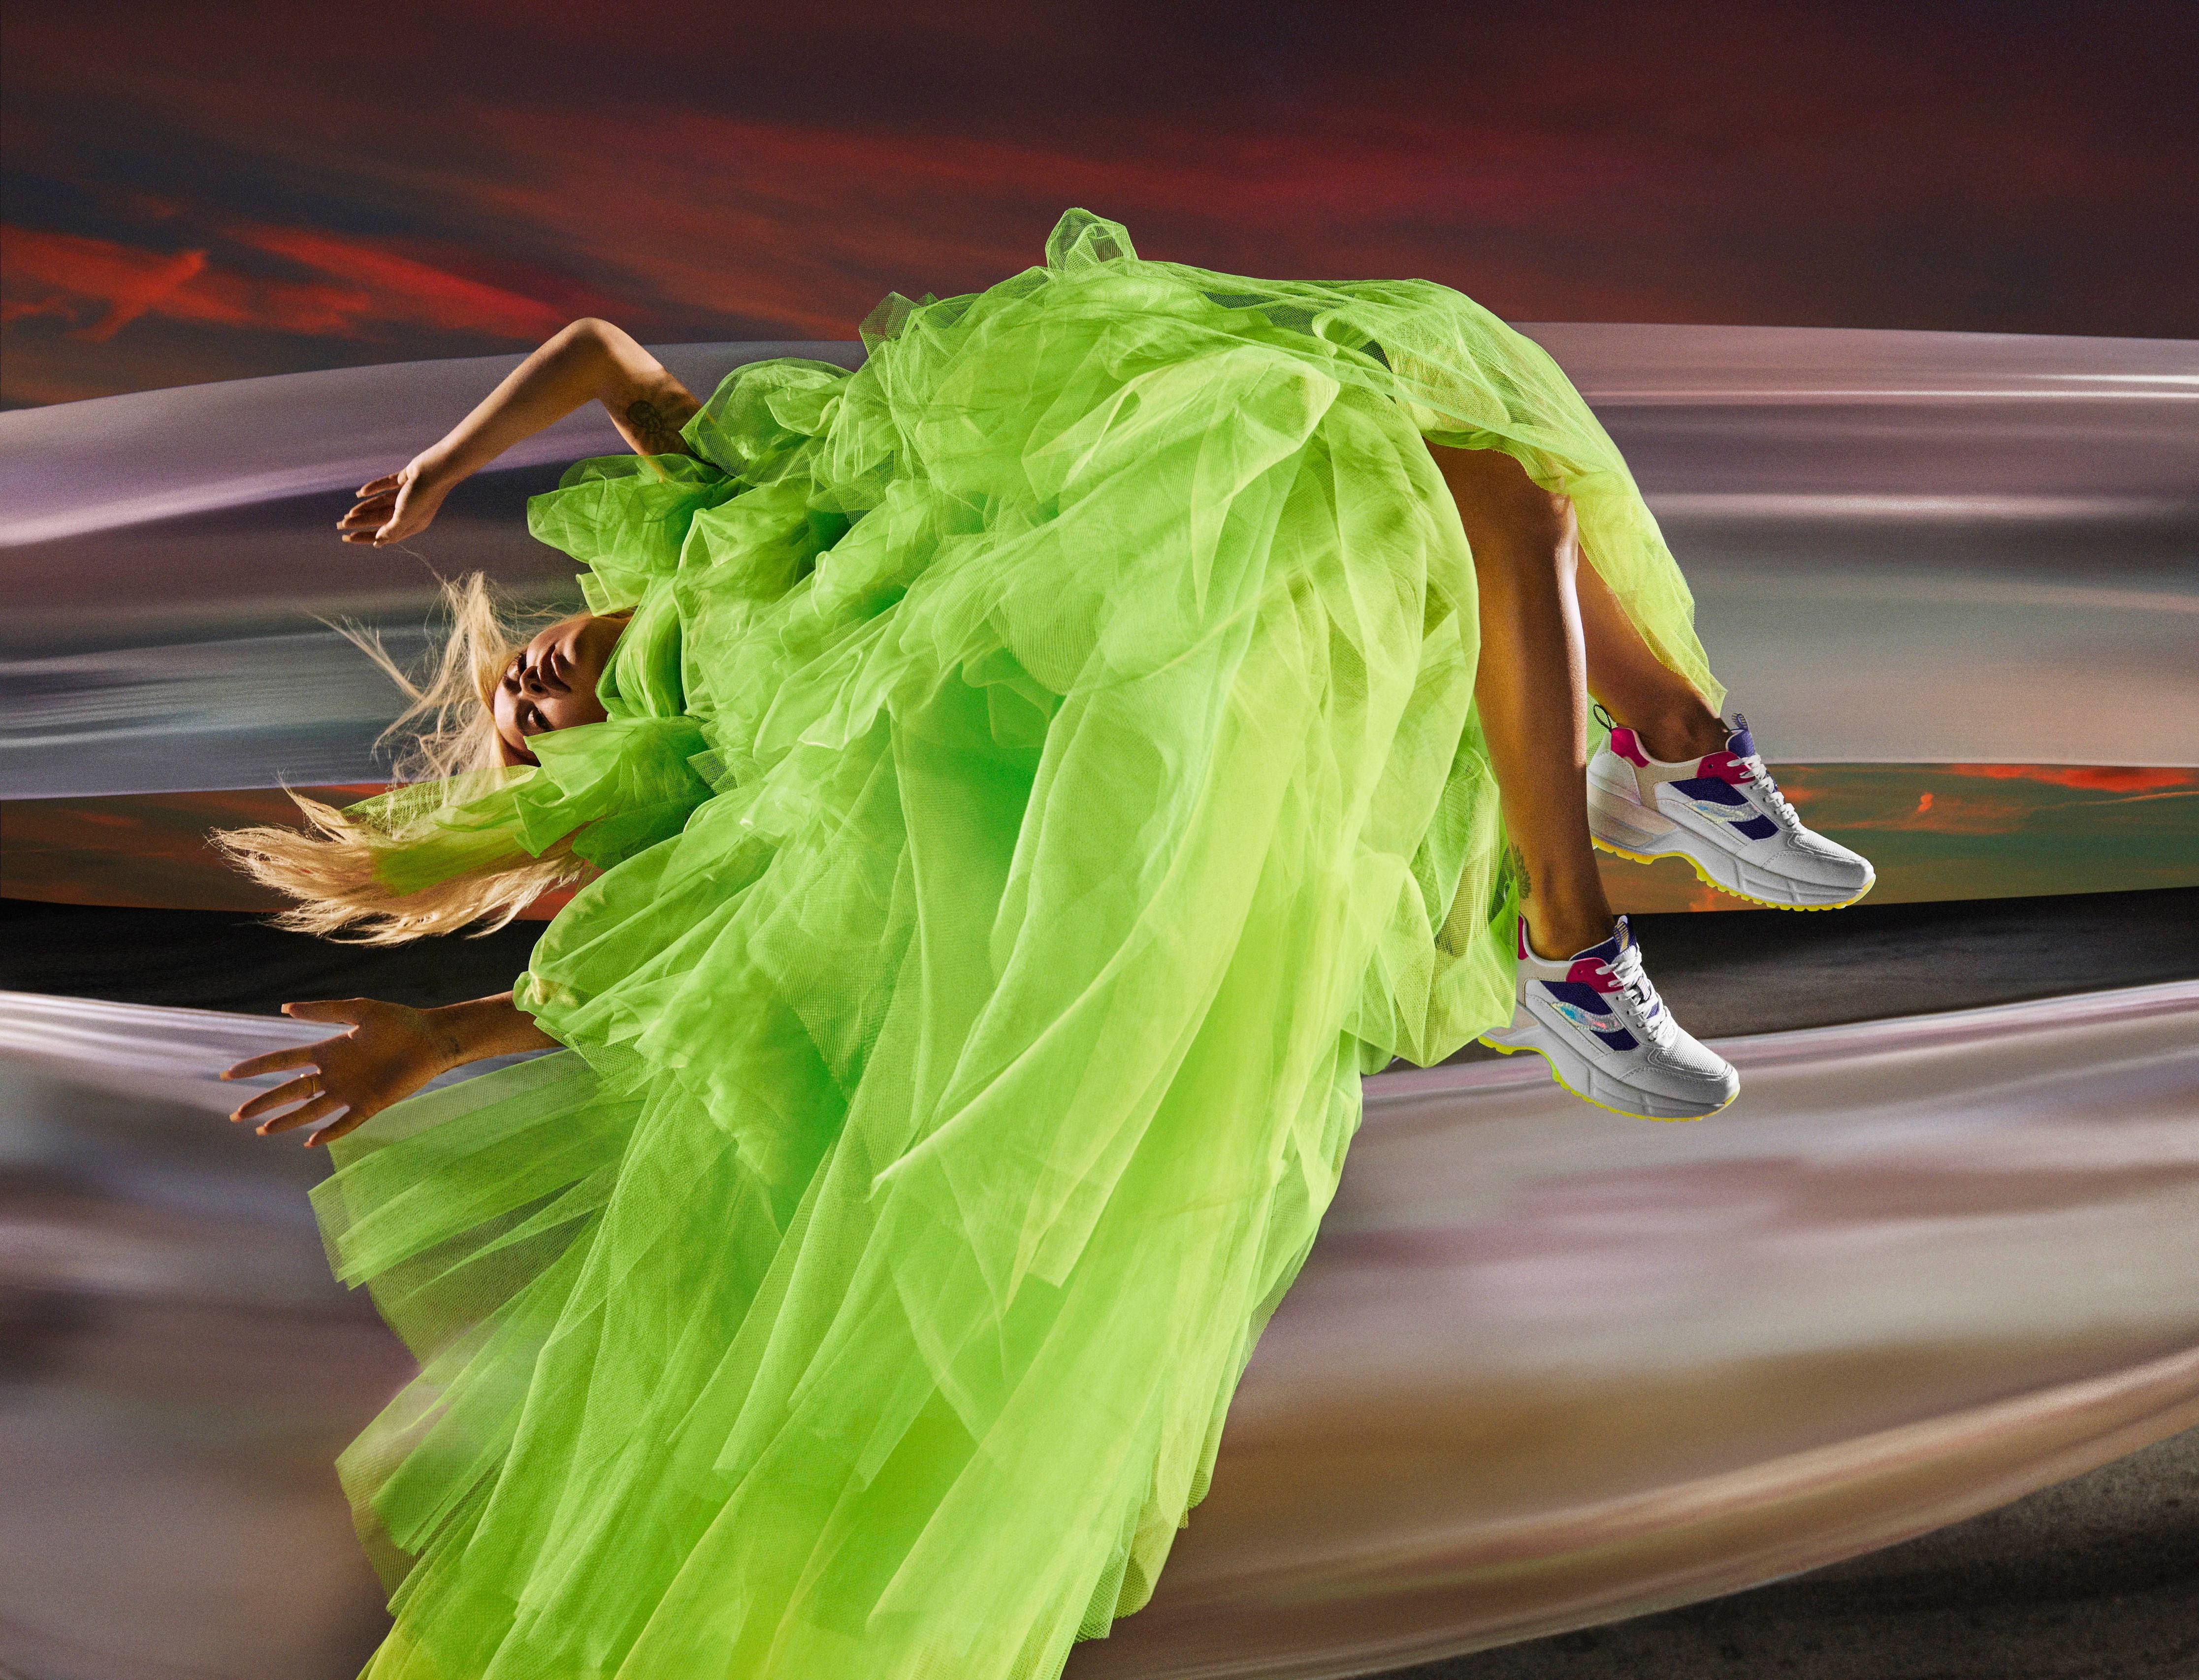 Rita Ora’s Bright Shoot for Shoes - Photo 9